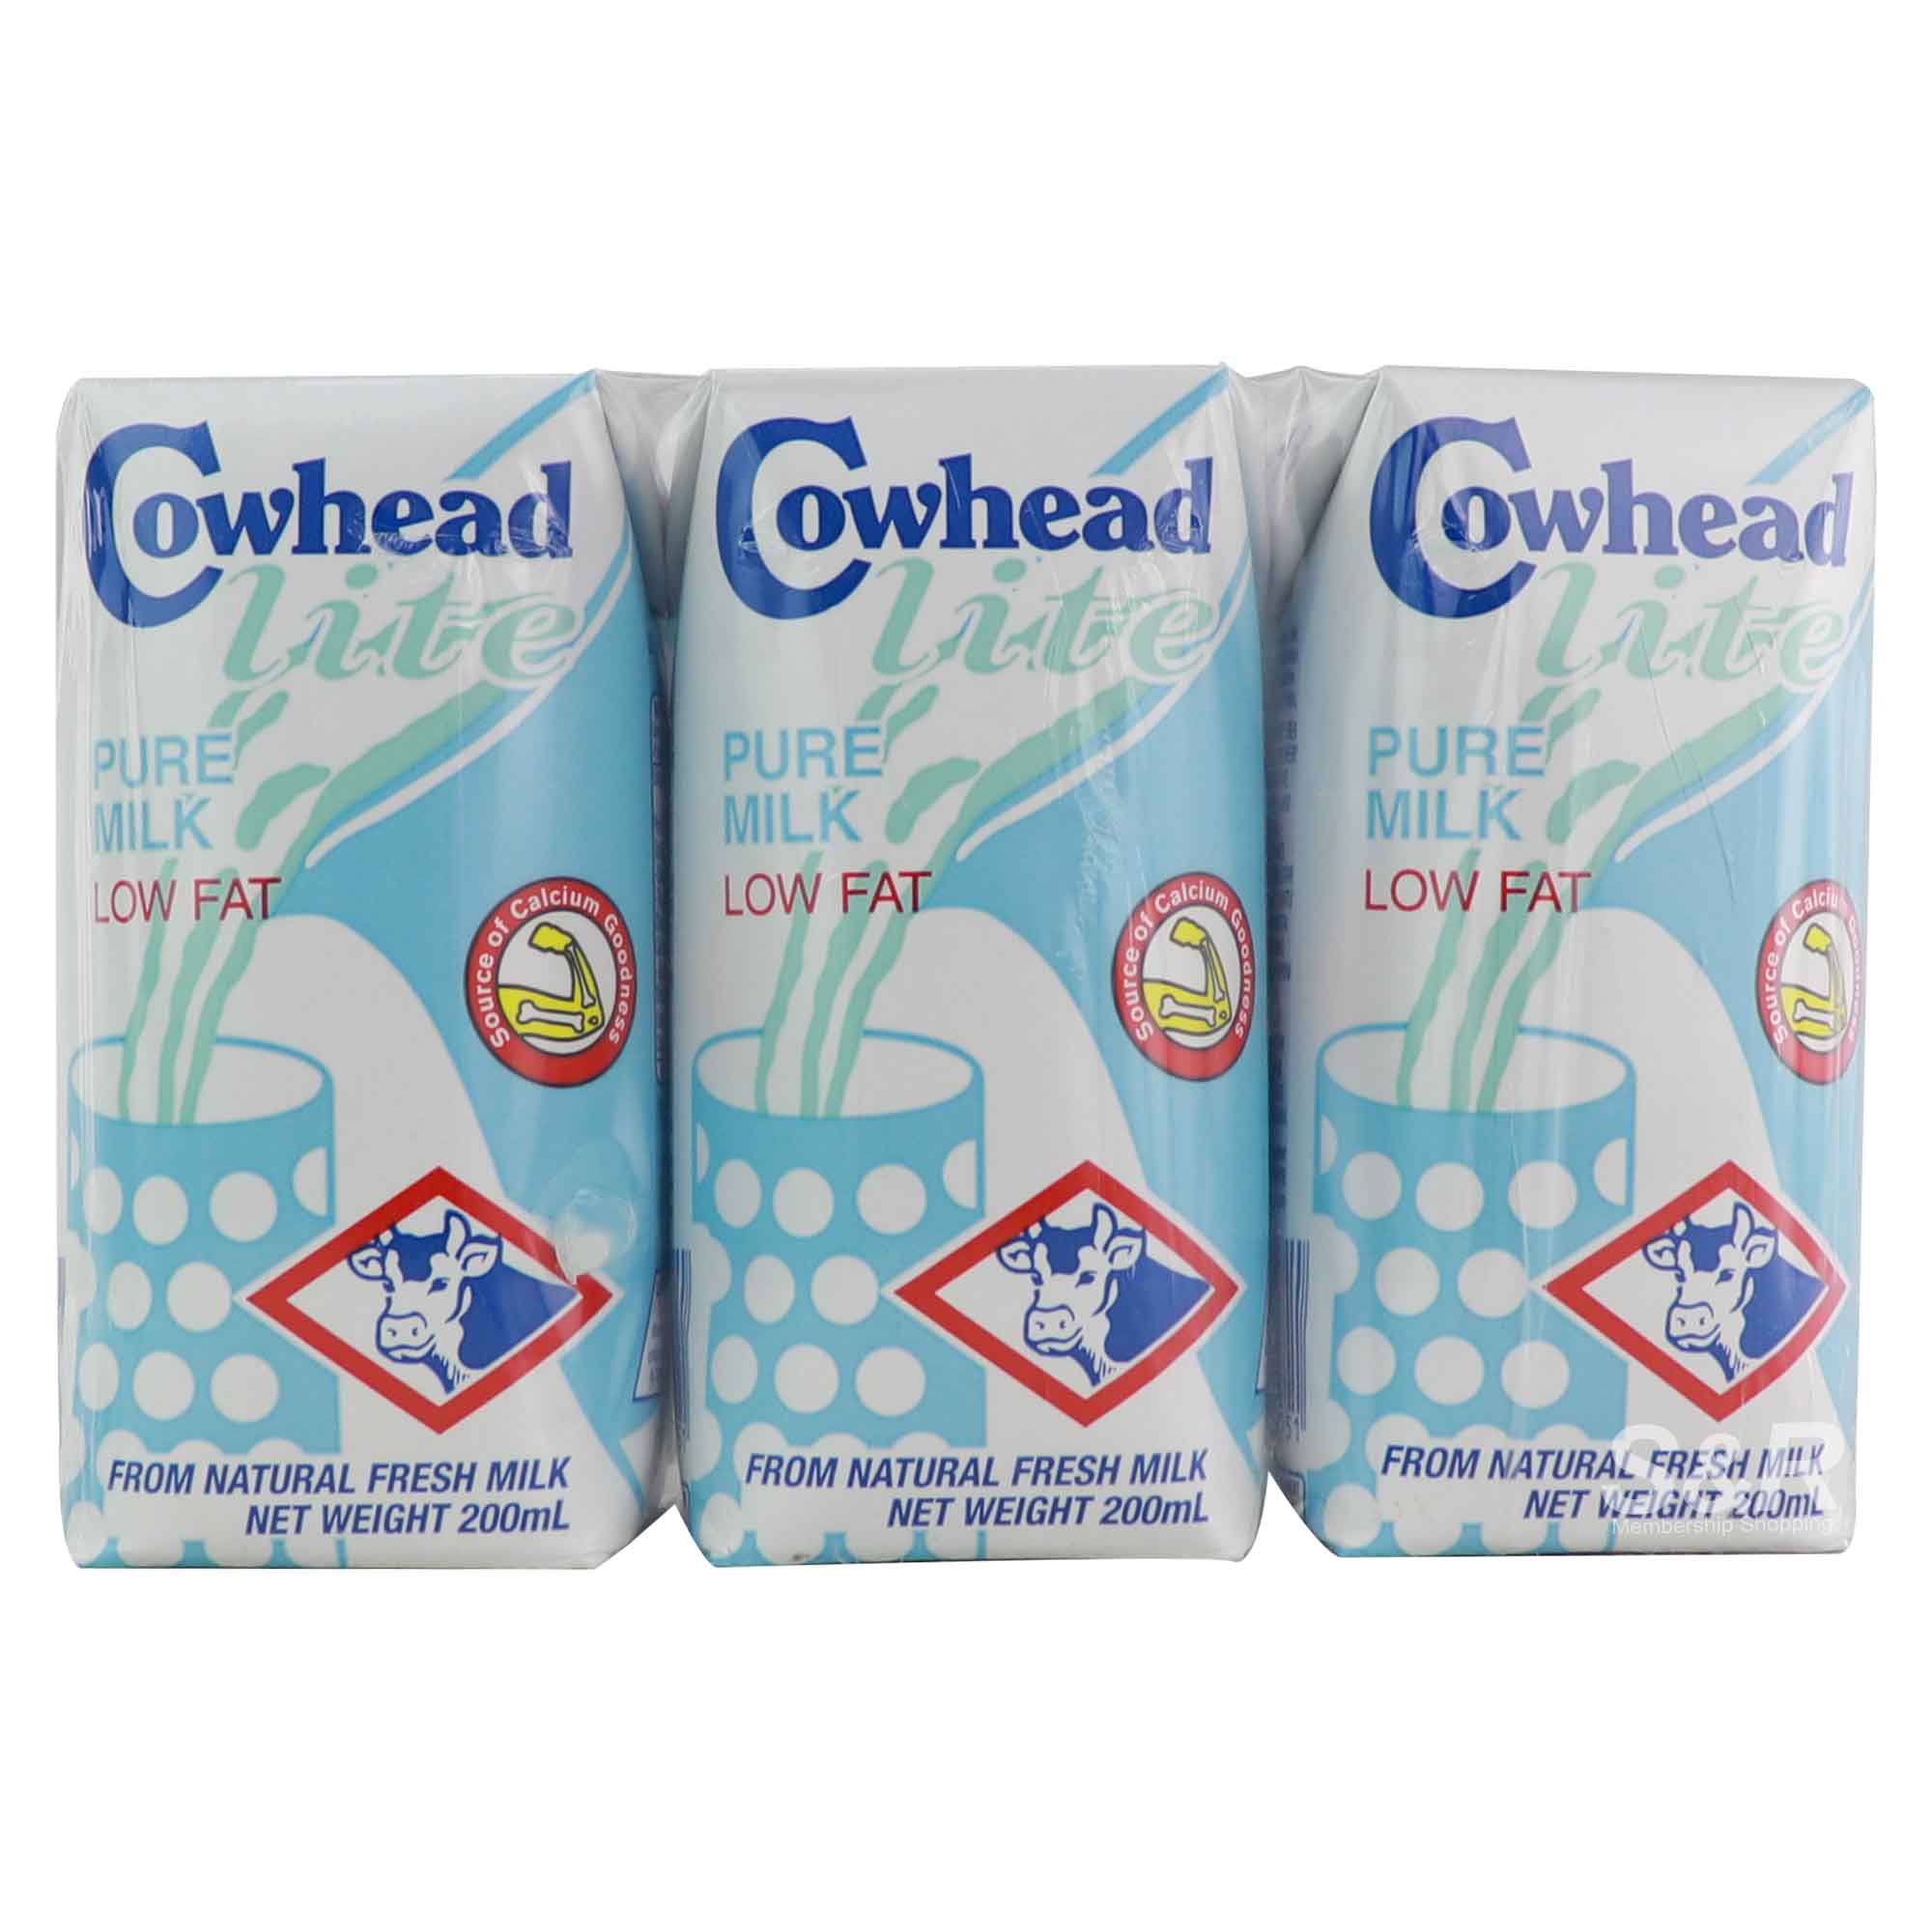 Cowhead Lite UHT Low Fat Pure Milk 3pcs